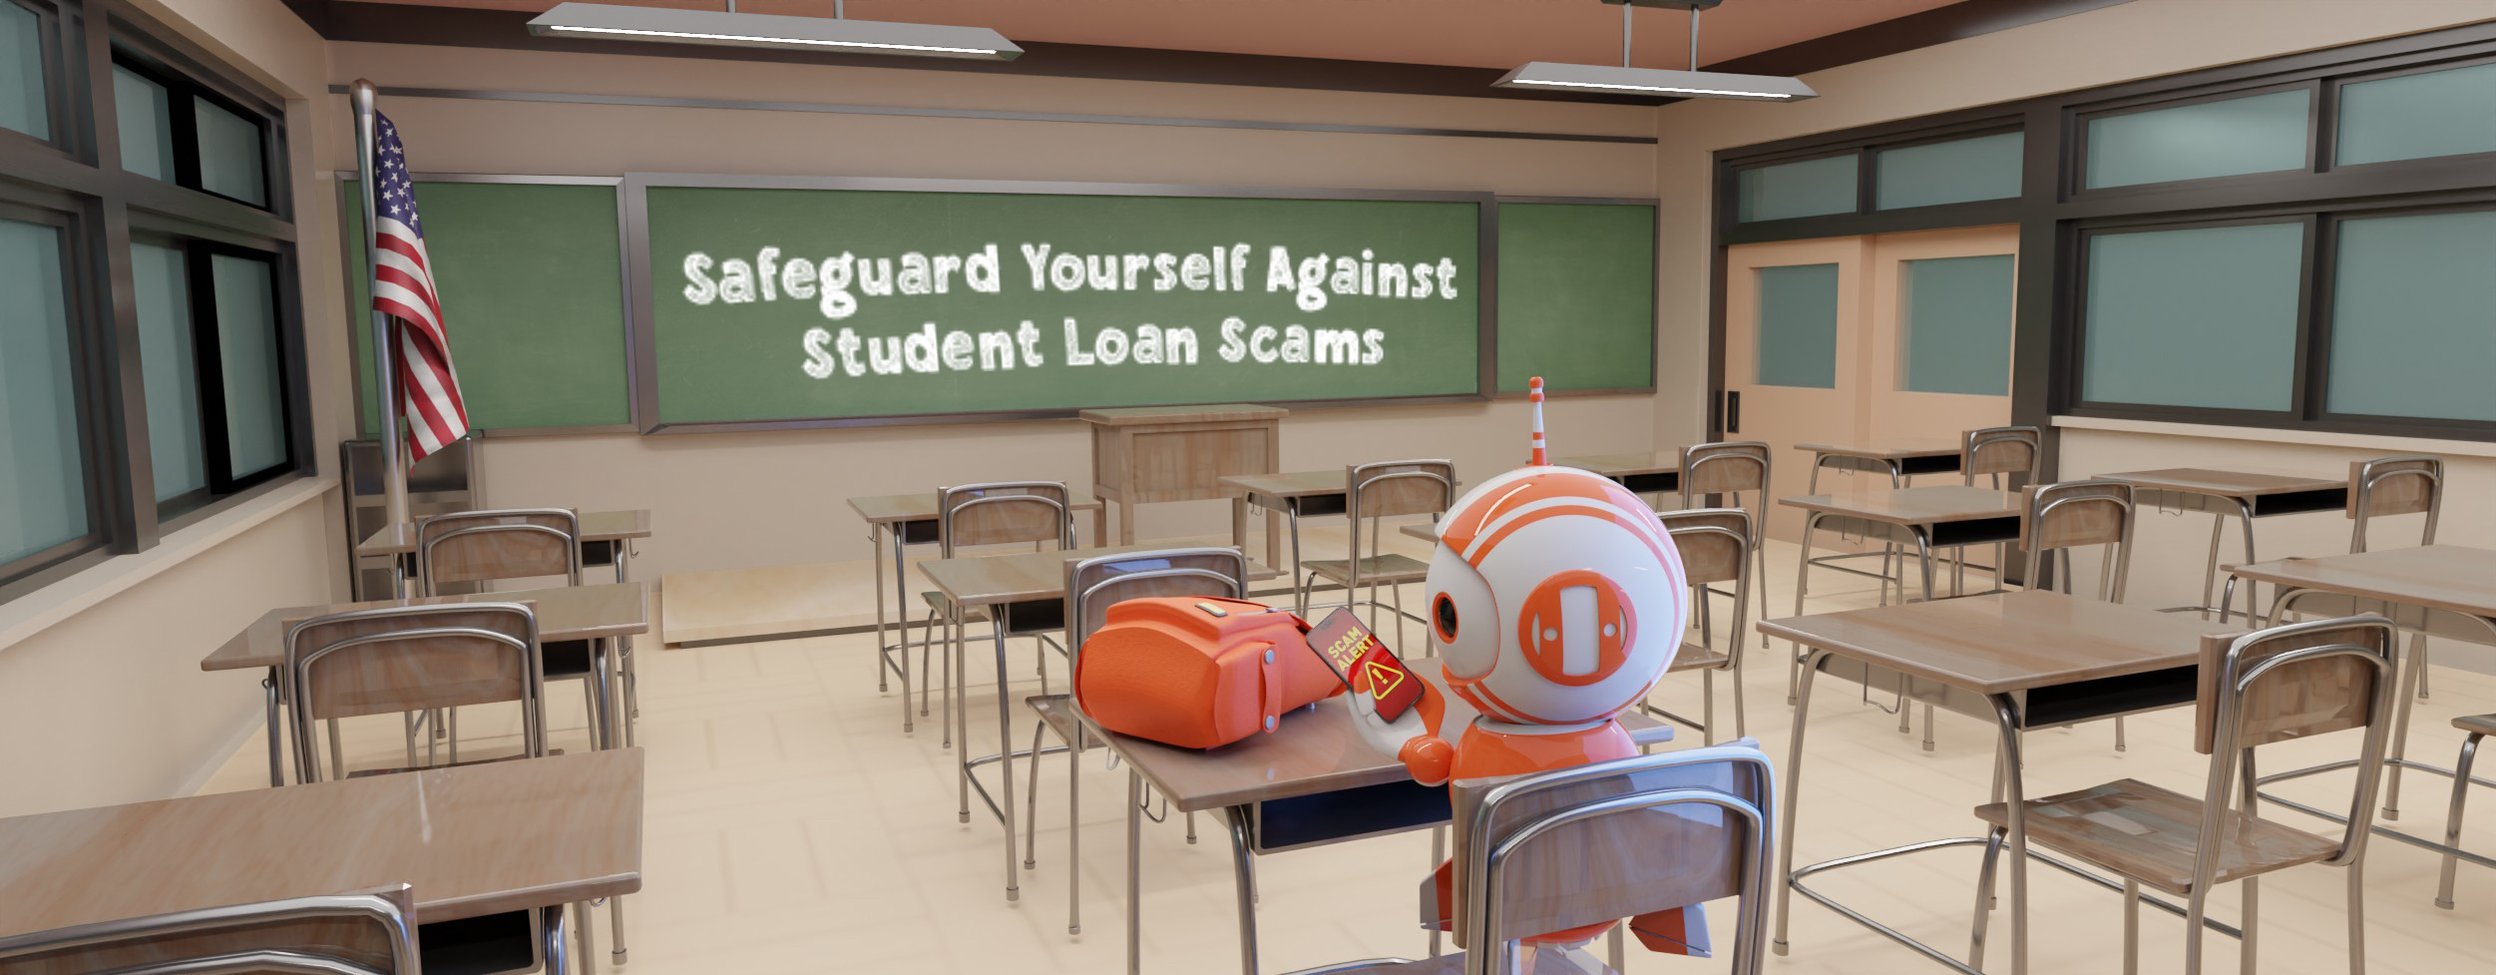 Student Loan Scam Awareness